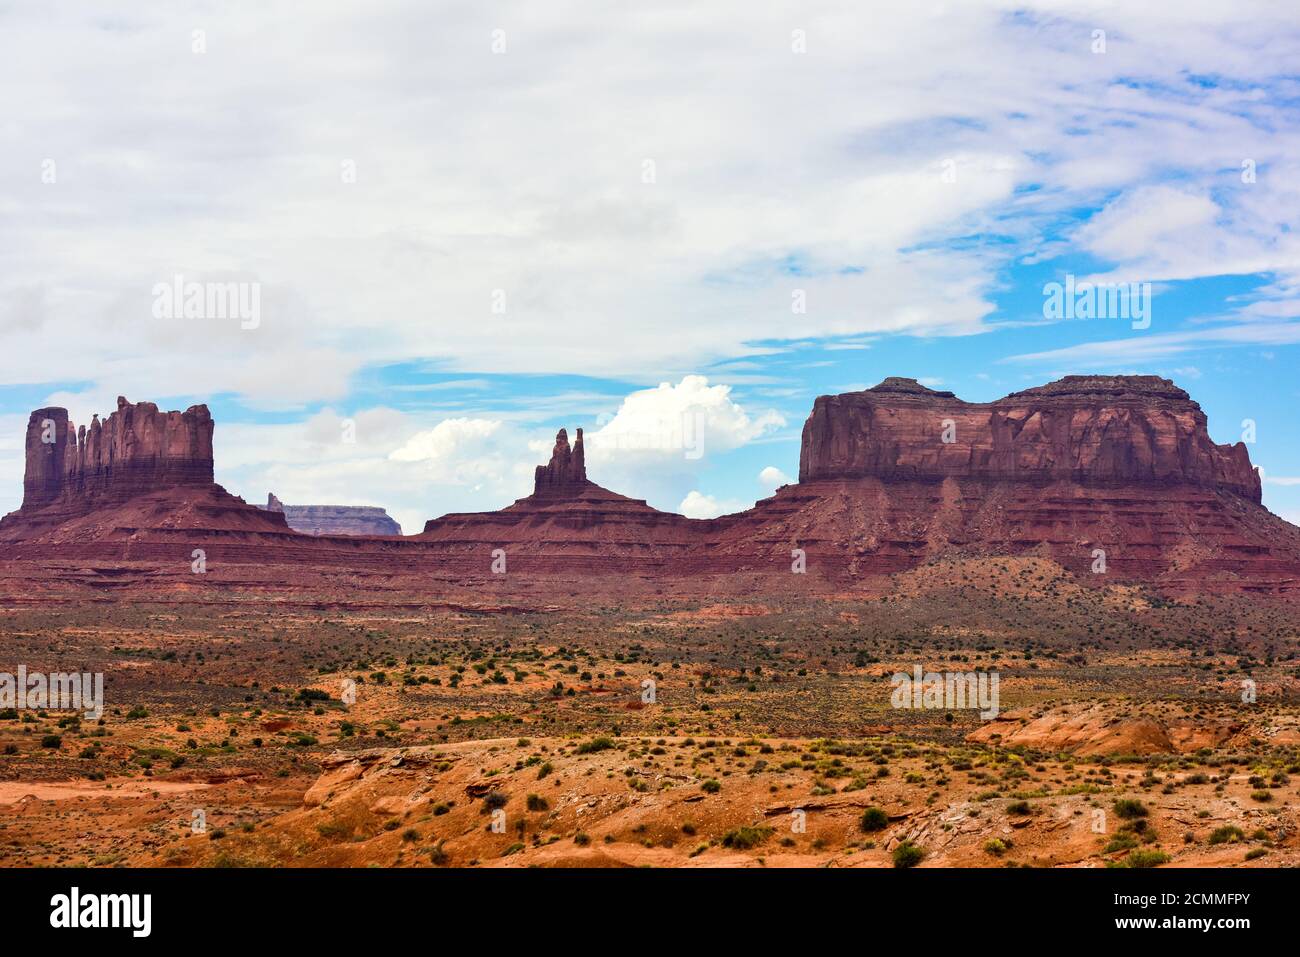 Monument Valley Arizona / Utah desert landscape Stock Photo